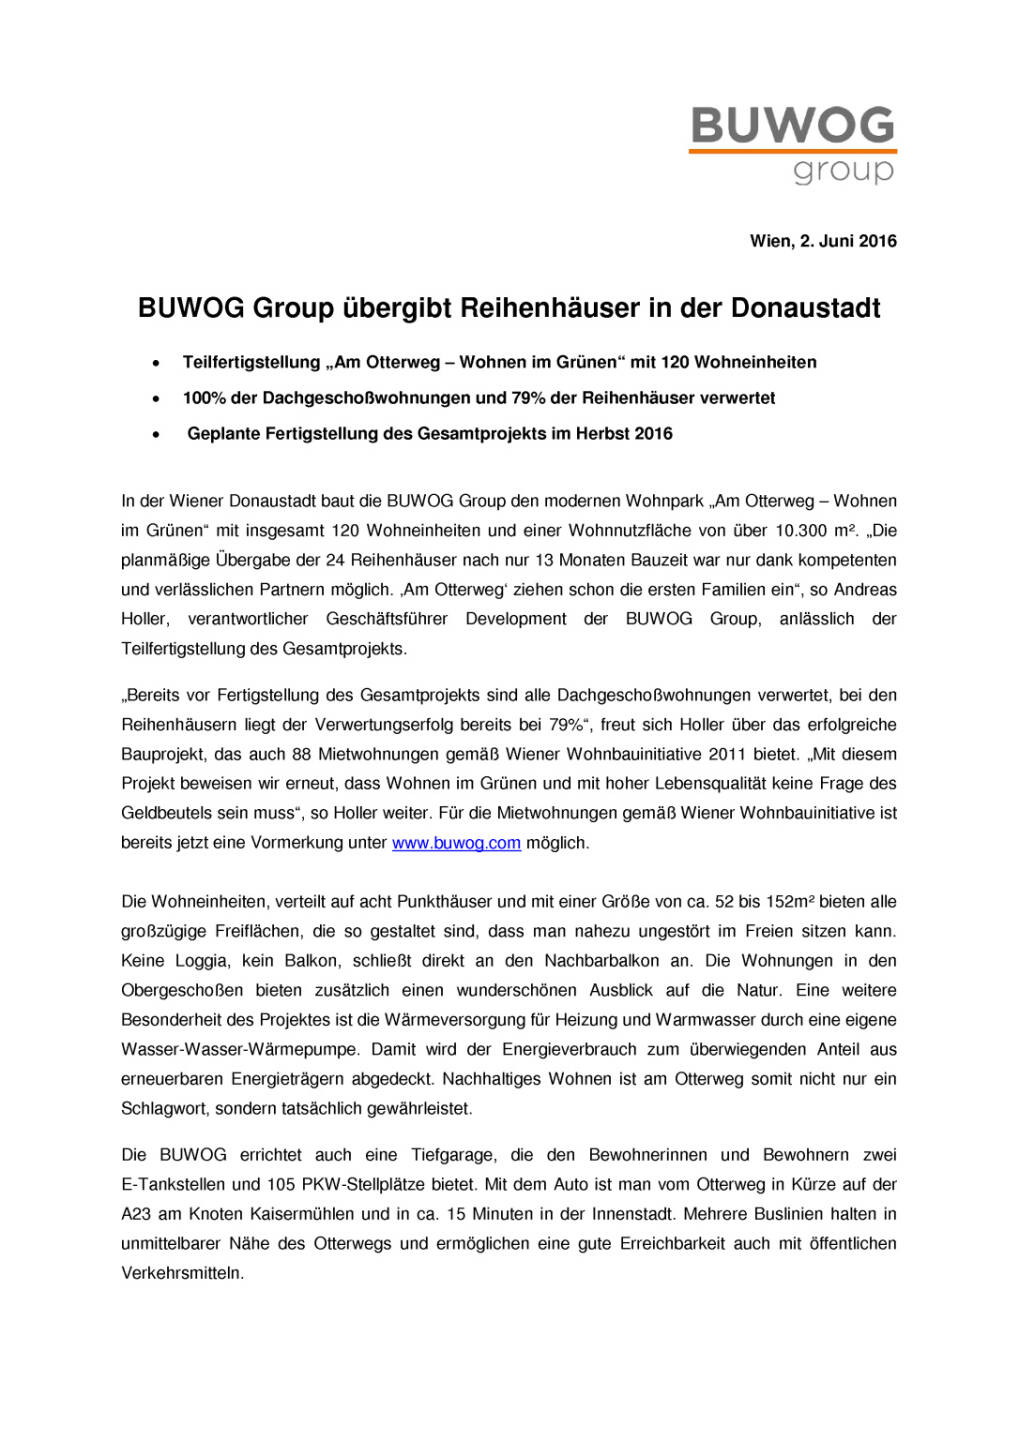 Buwog Group: Teilfertigstellung Wohnpark „Am Otterweg“, Seite 1/2, komplettes Dokument unter http://boerse-social.com/static/uploads/file_1158_buwog_group_teilfertigstellung_wohnpark_am_otterweg.pdf